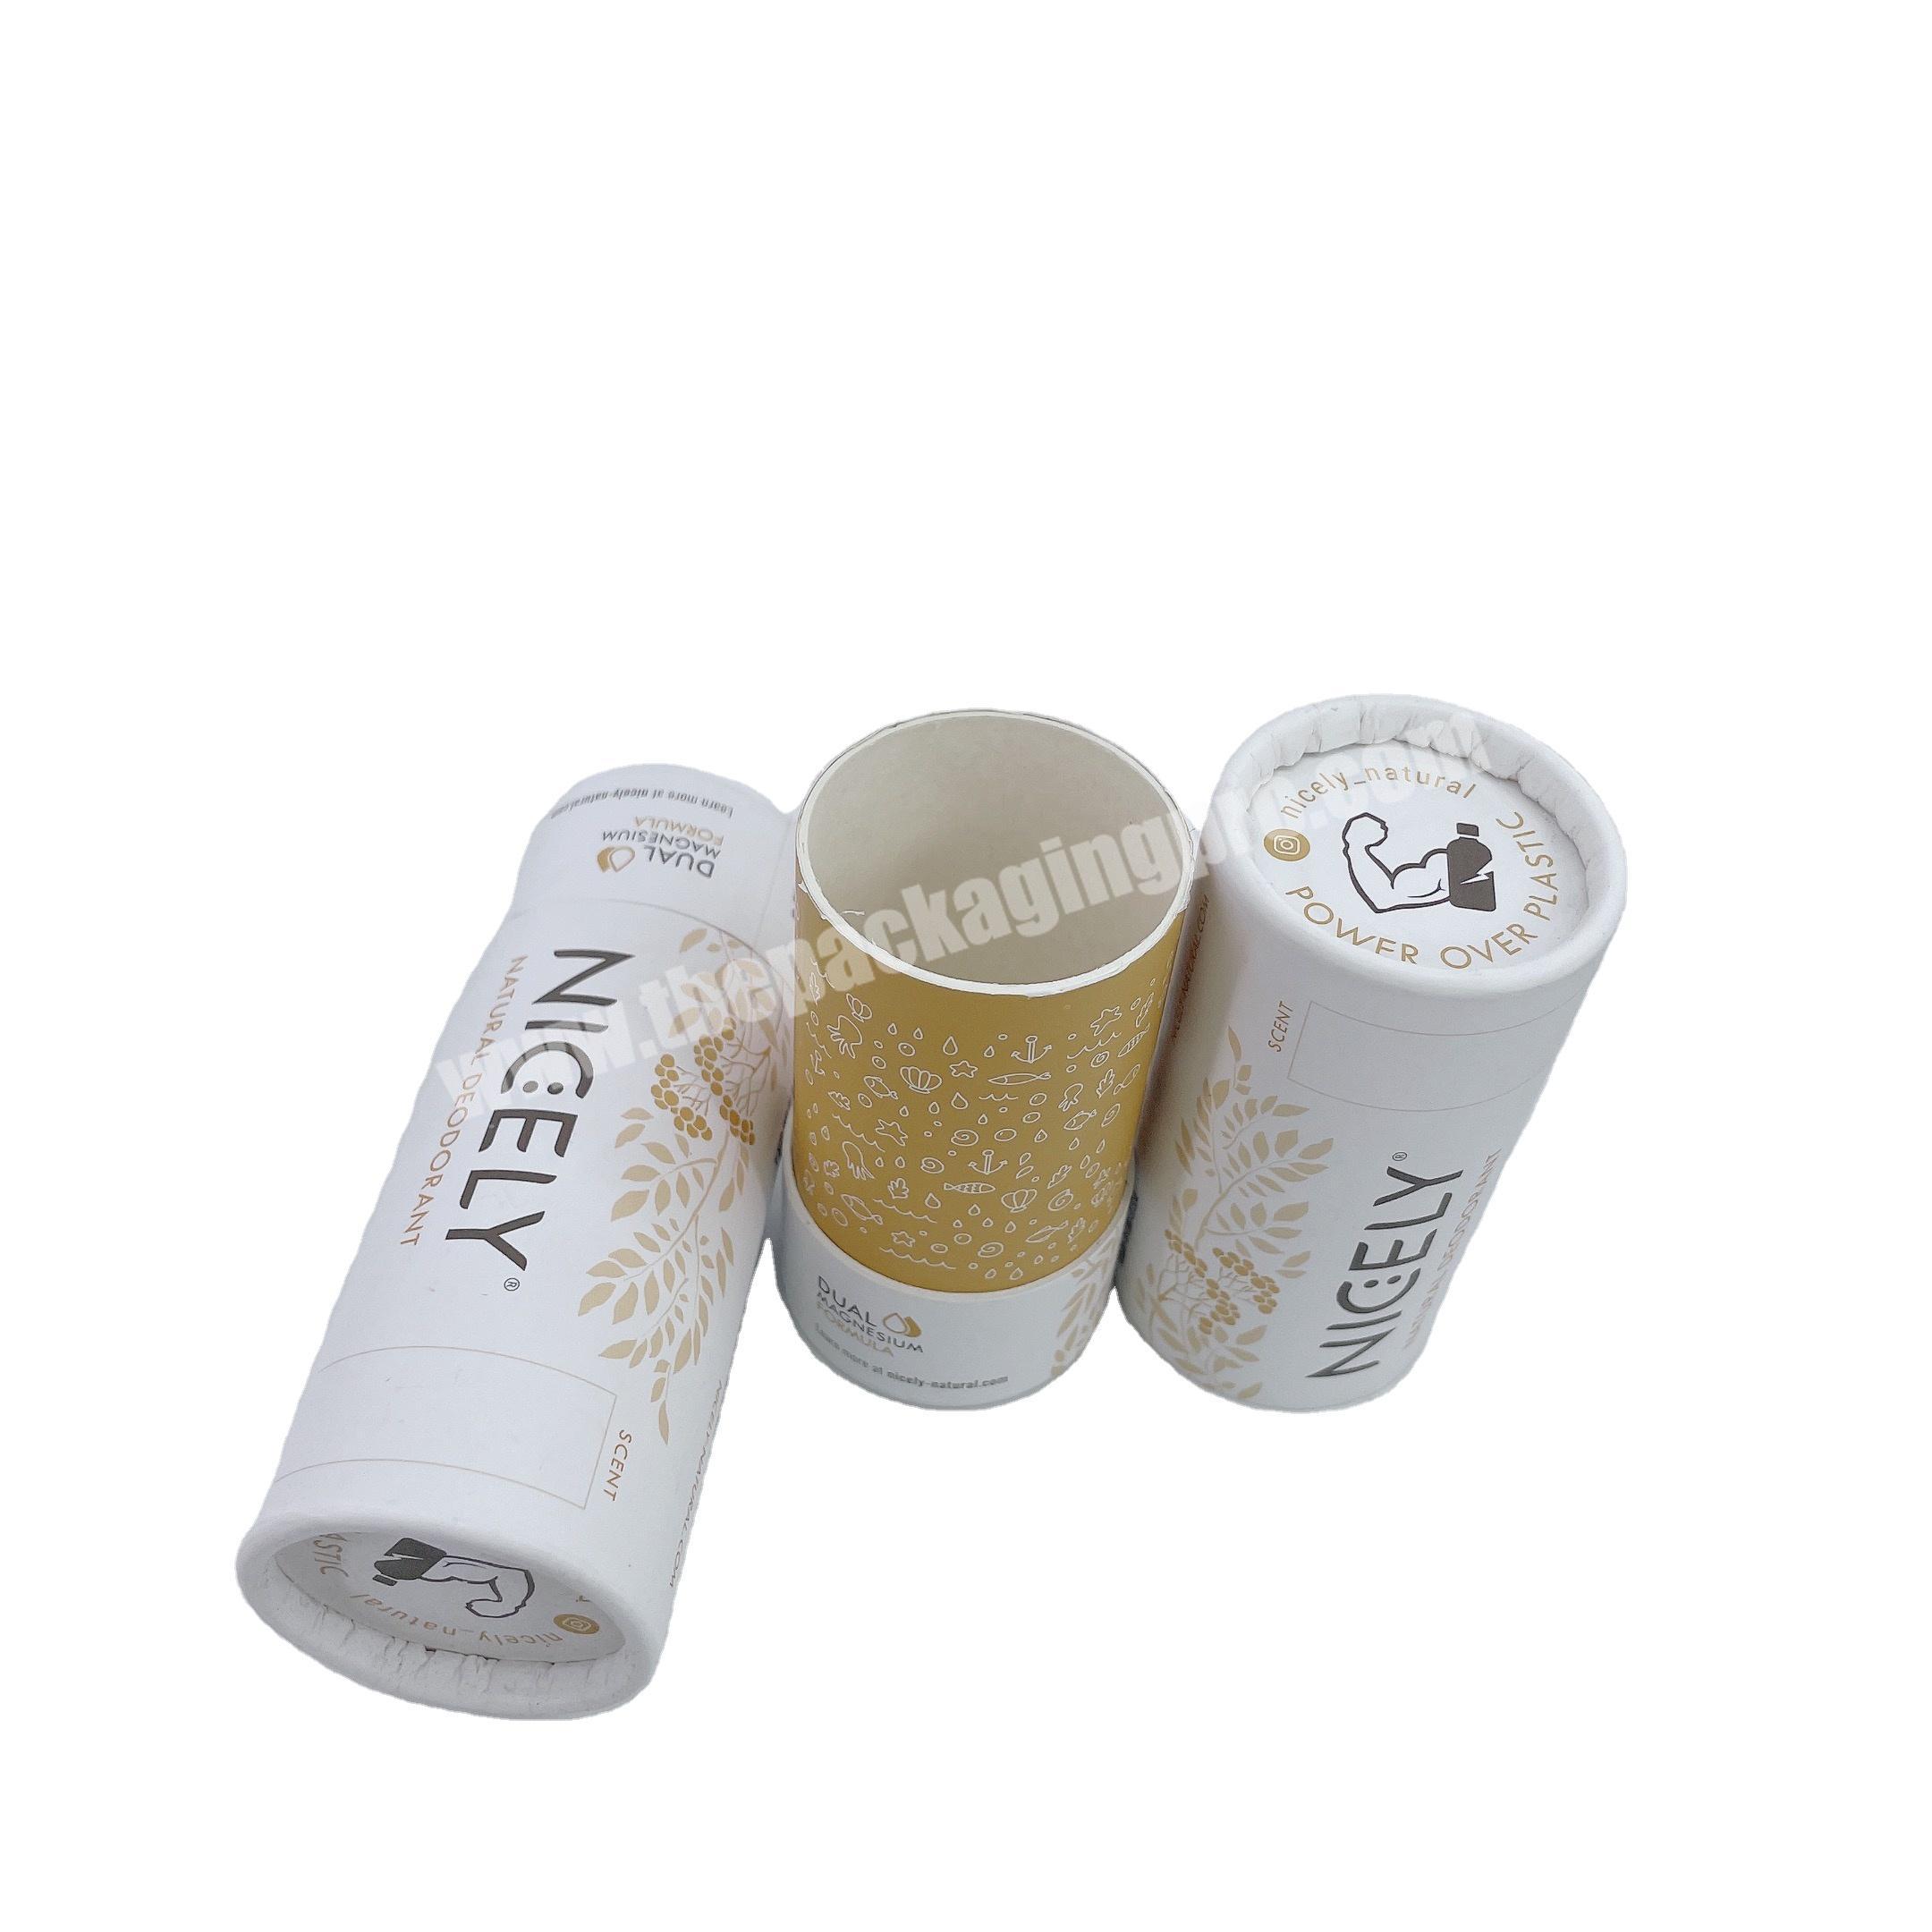 100% Plastic Free Eco Friendly Empty Deodorant Stick Packaging Cardboard deodorant Container